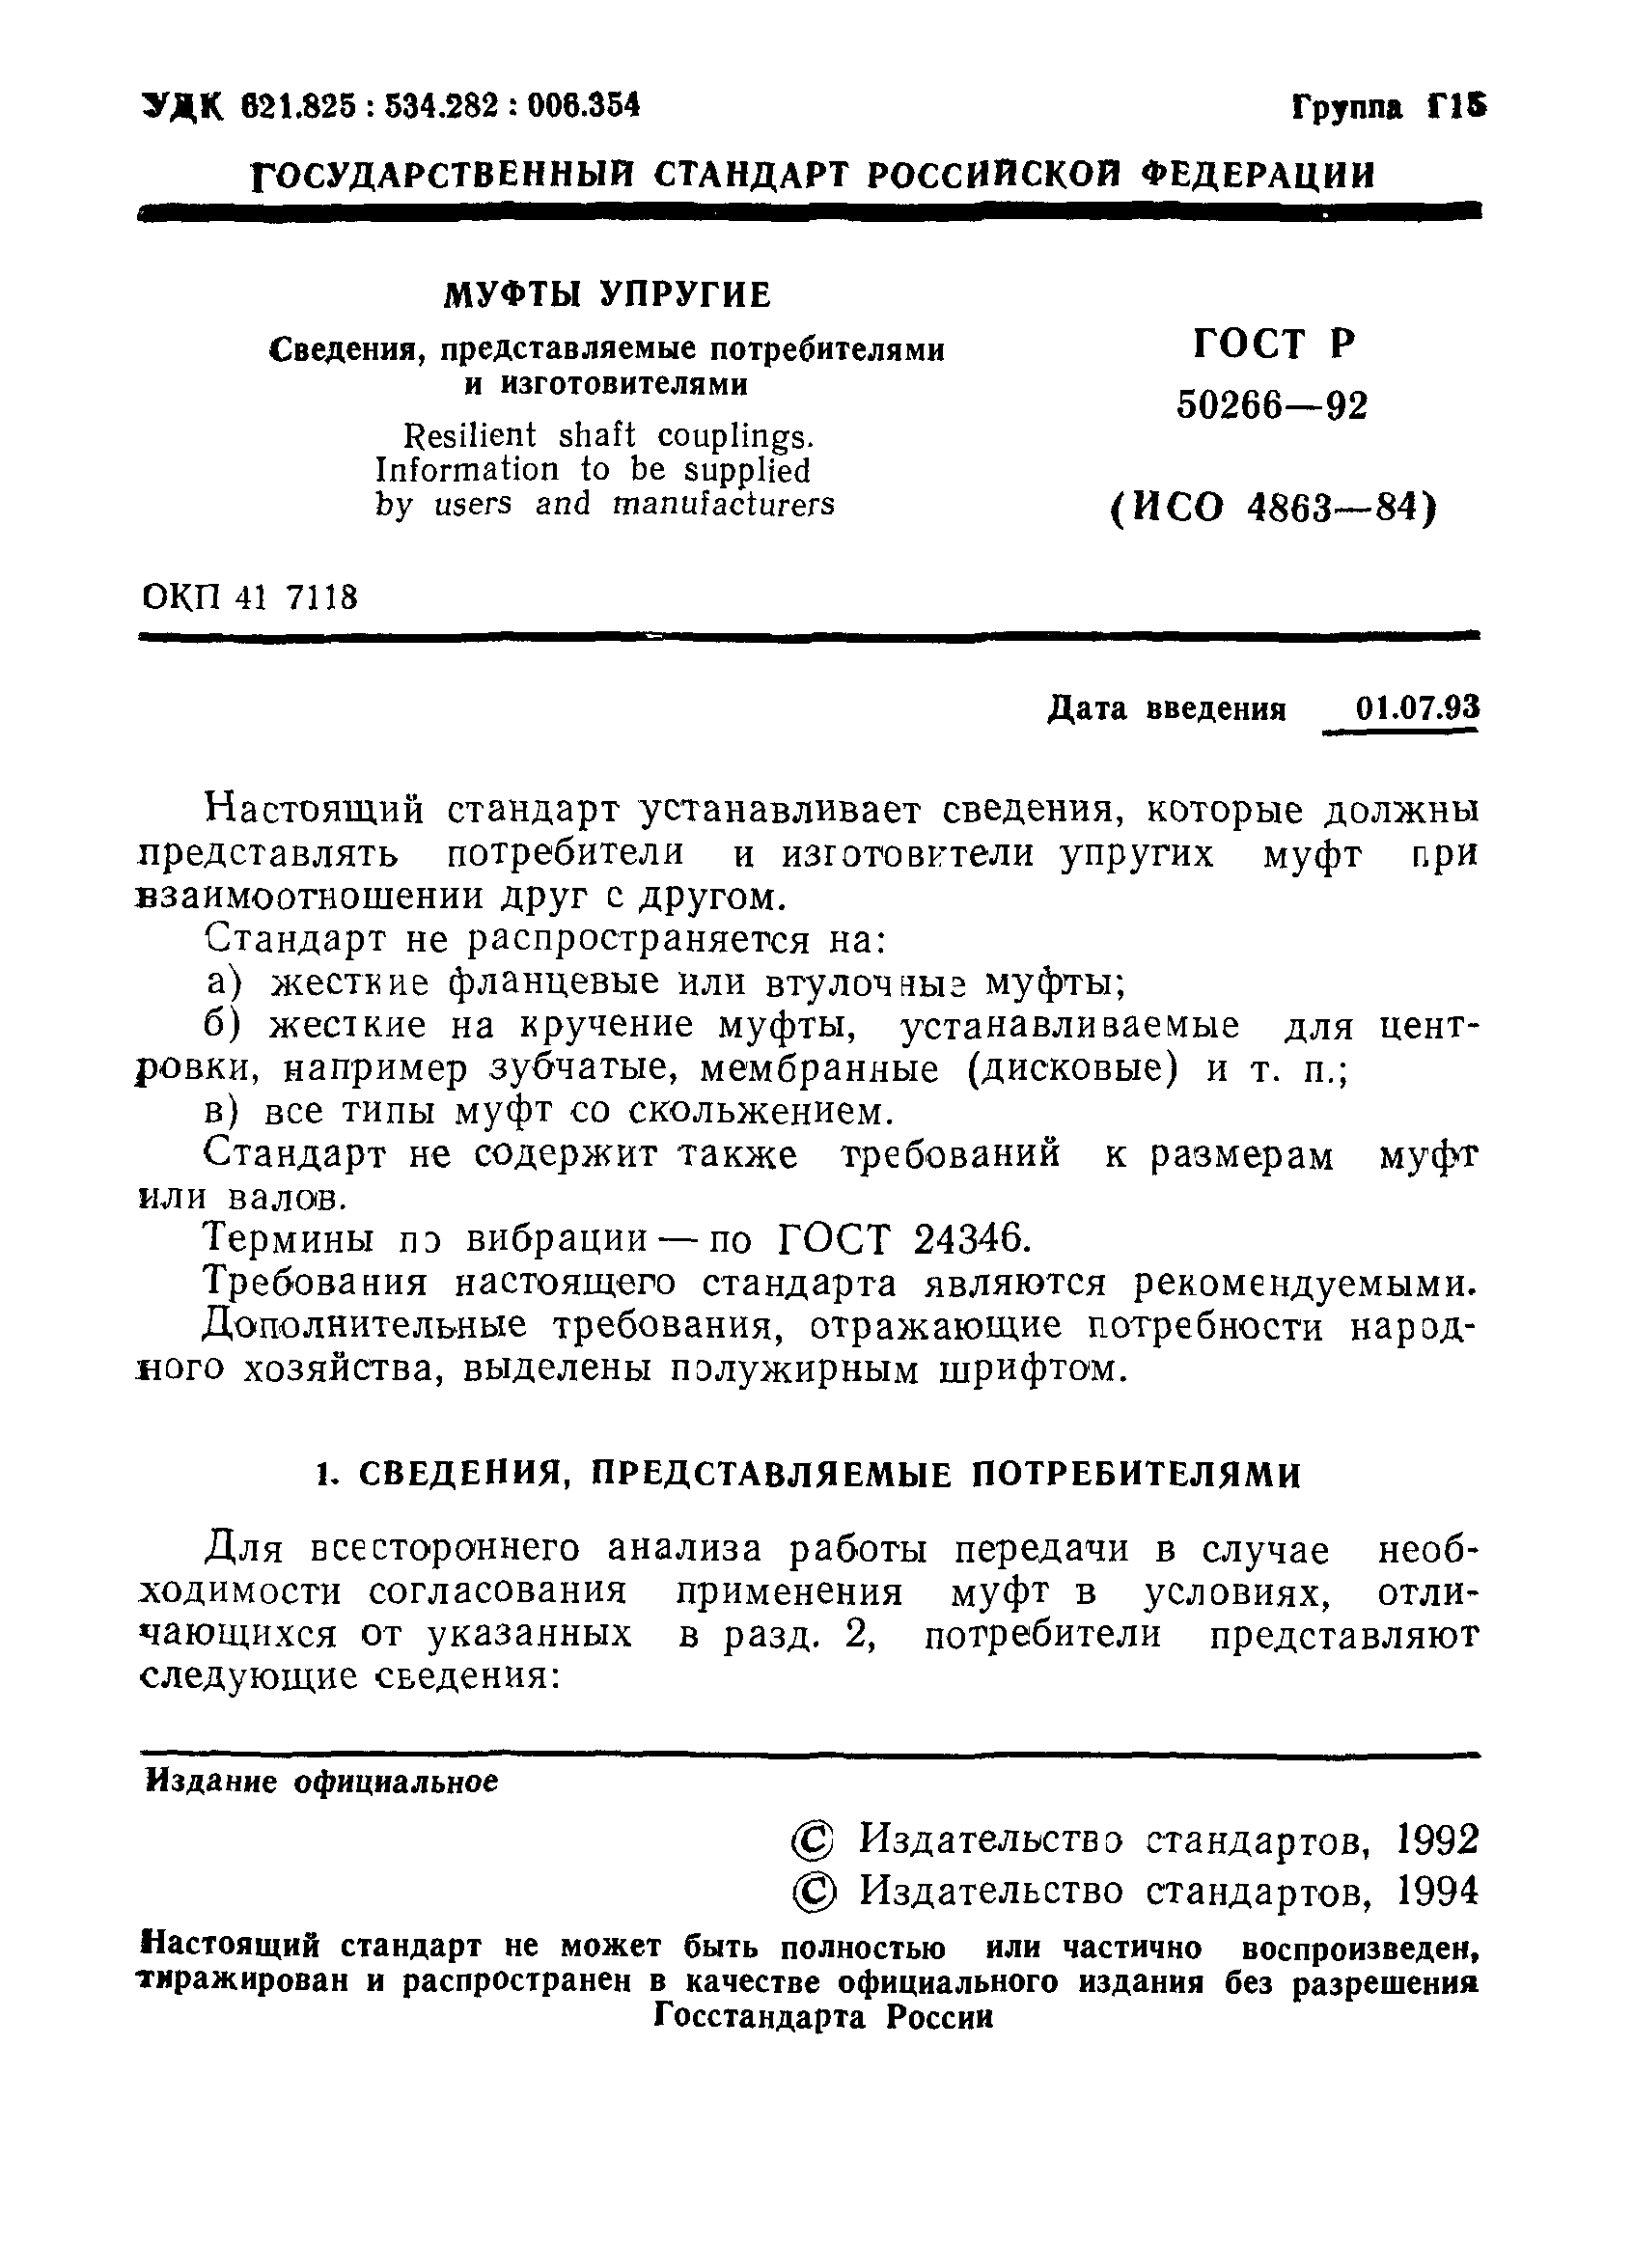 ГОСТ Р 50266-92